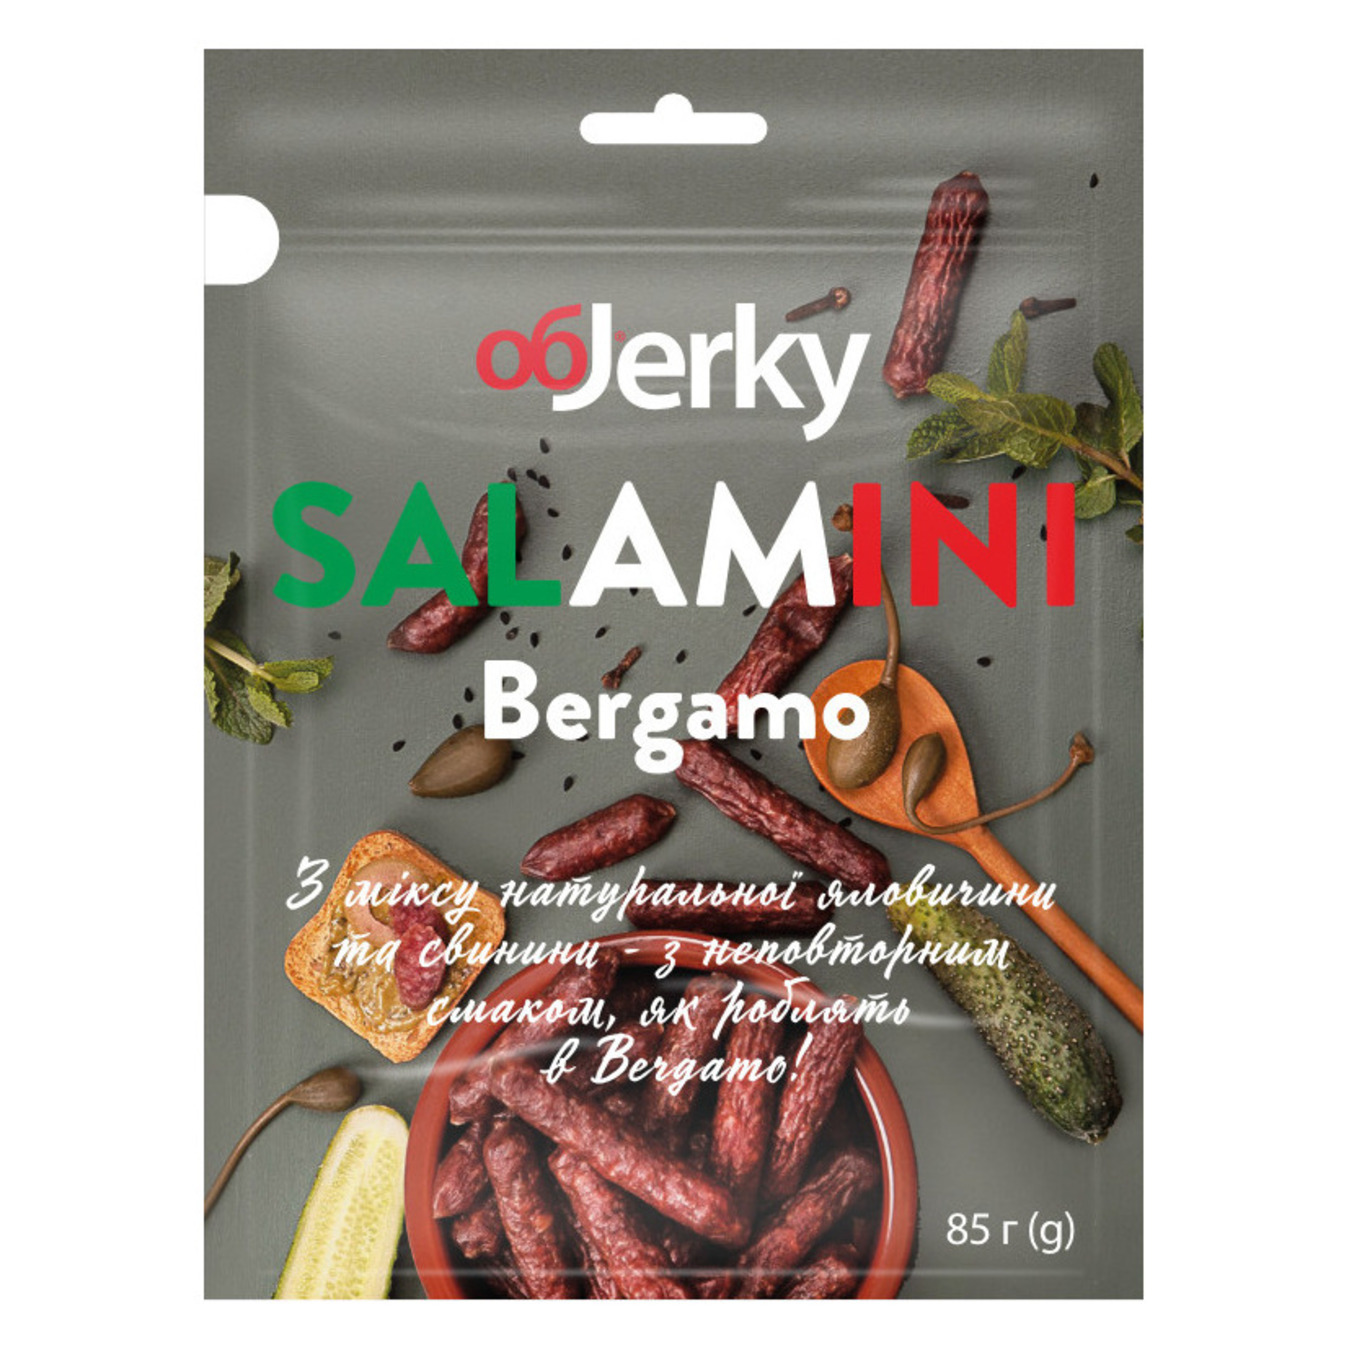 ObJerky Sausages Salamini Bergamo gray-cured 85g